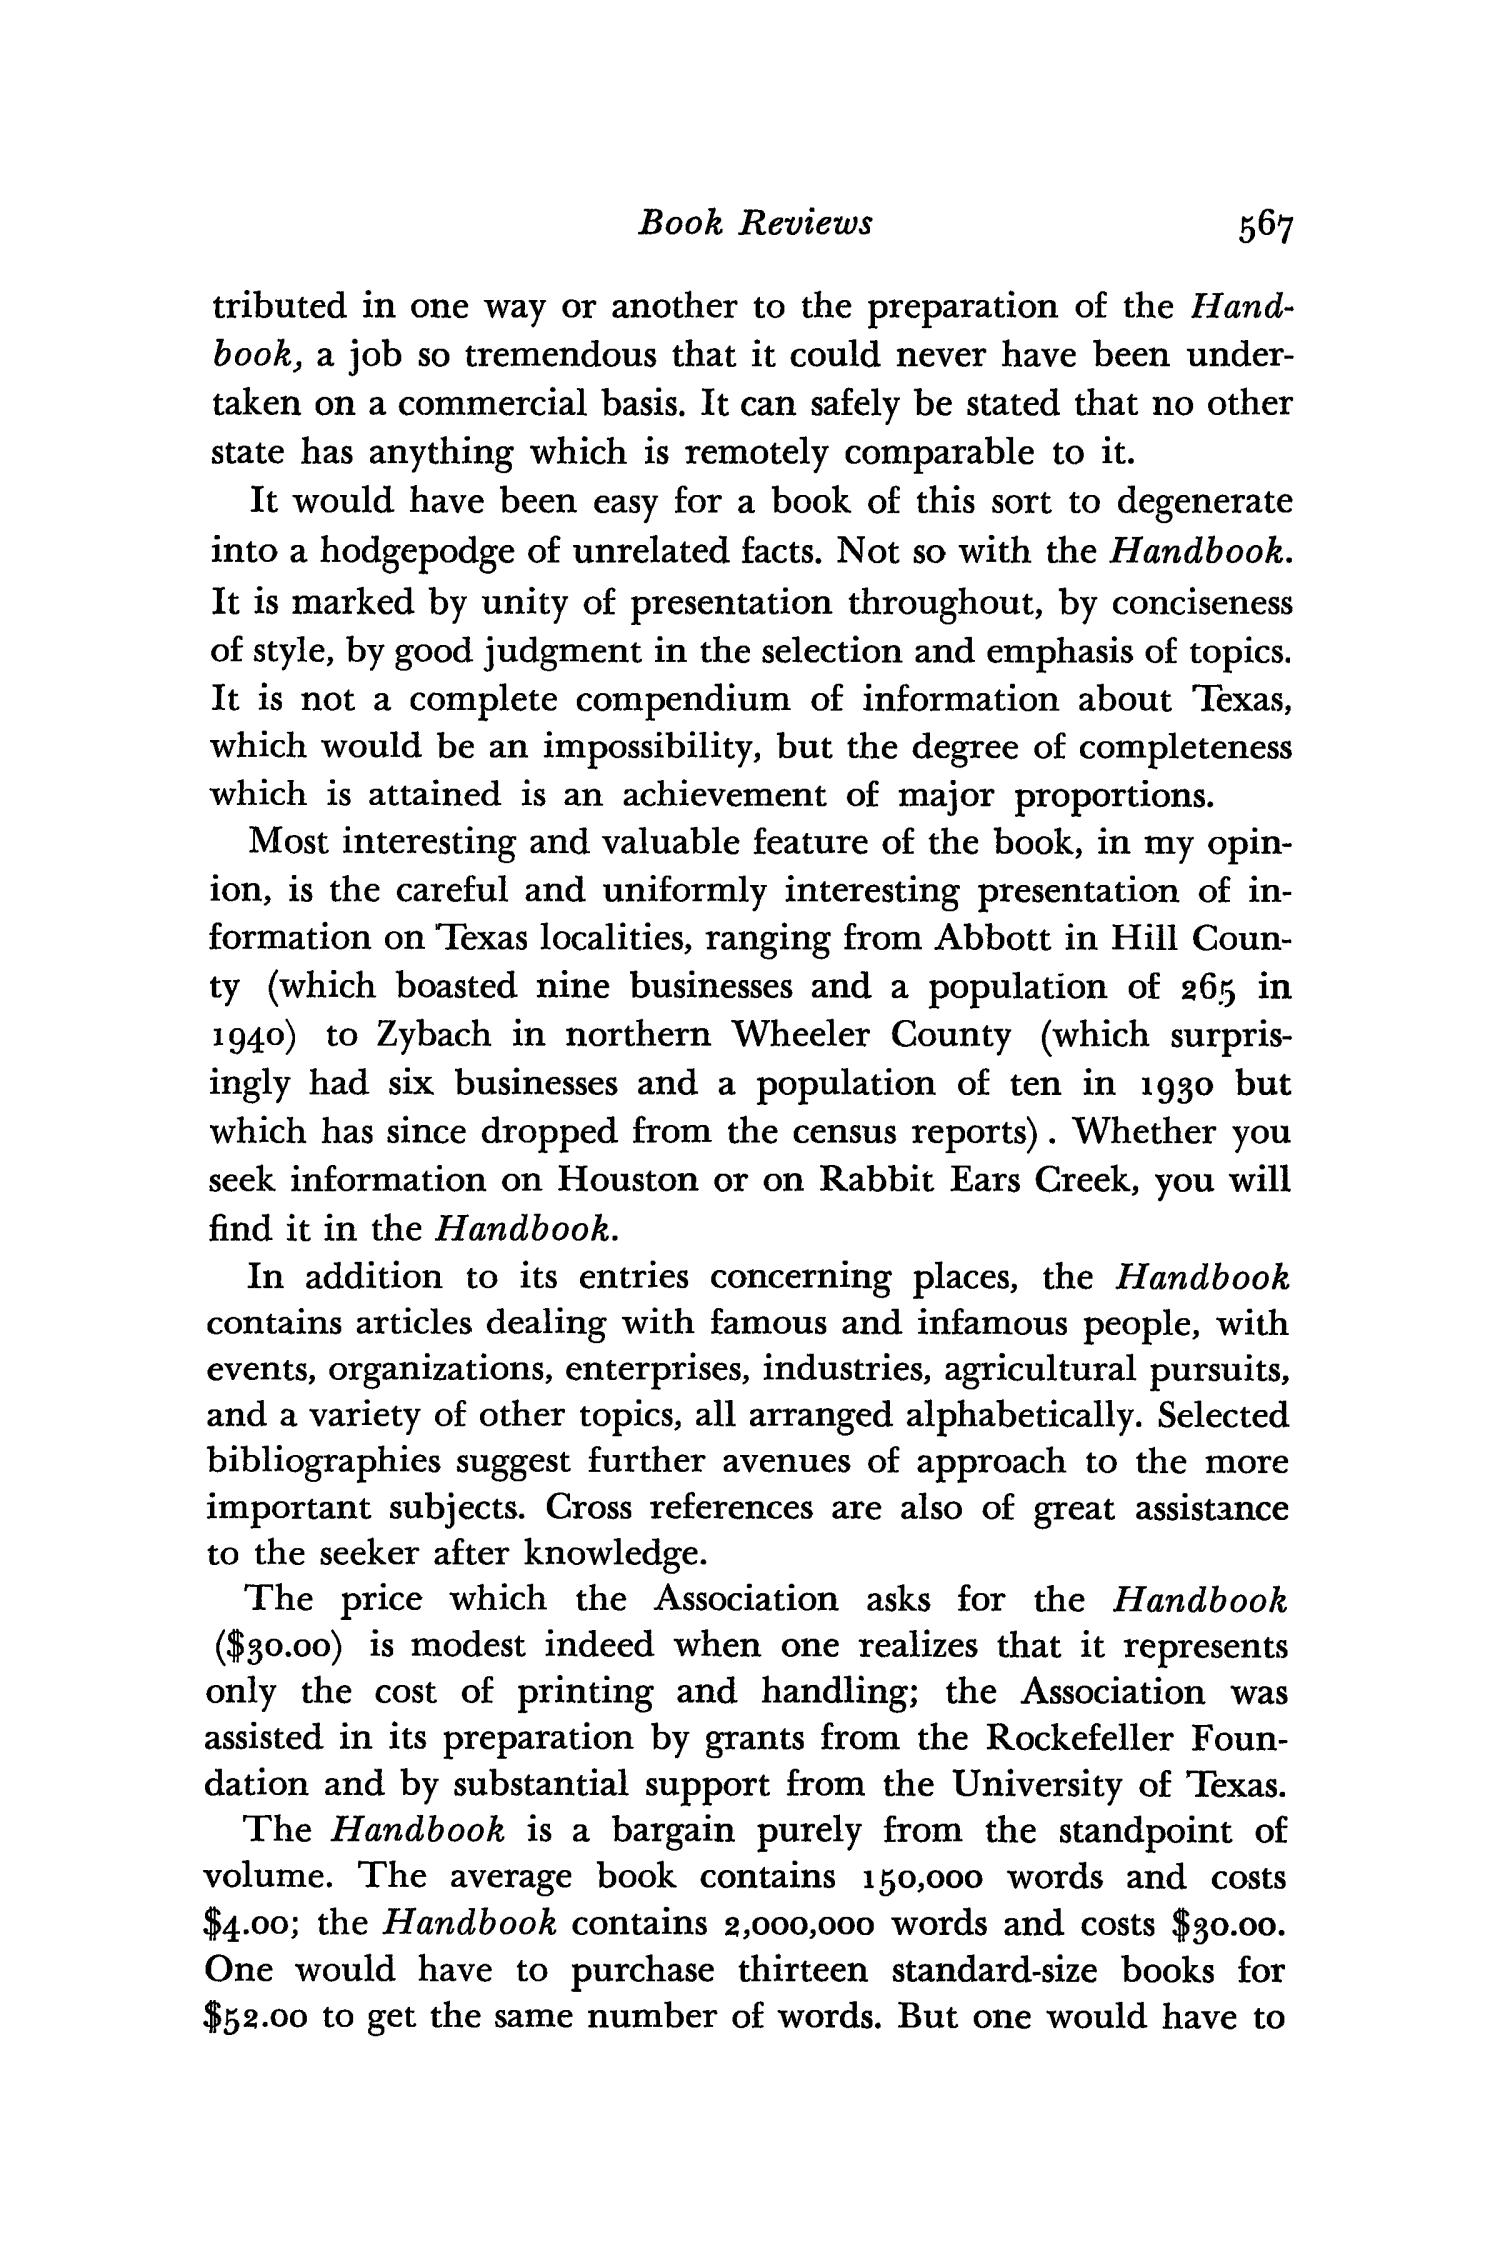 The Southwestern Historical Quarterly, Volume 56, July 1952 - April, 1953
                                                
                                                    567
                                                